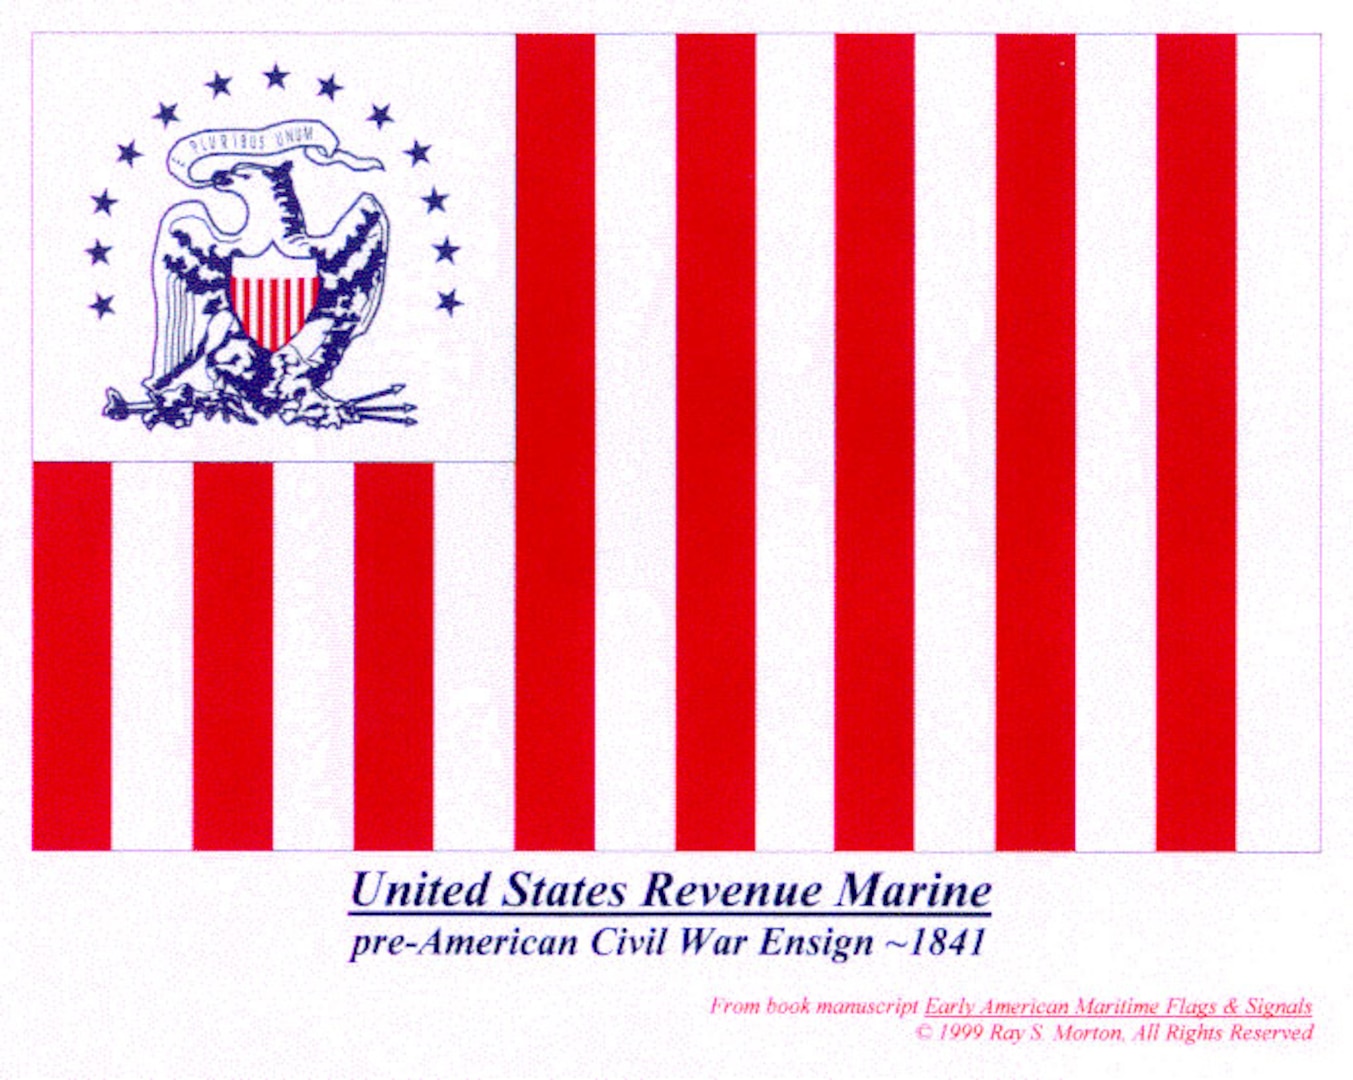 U.S. Revenue Cutter Service ensign flown during the Civil War. (Coast Guard Collection)